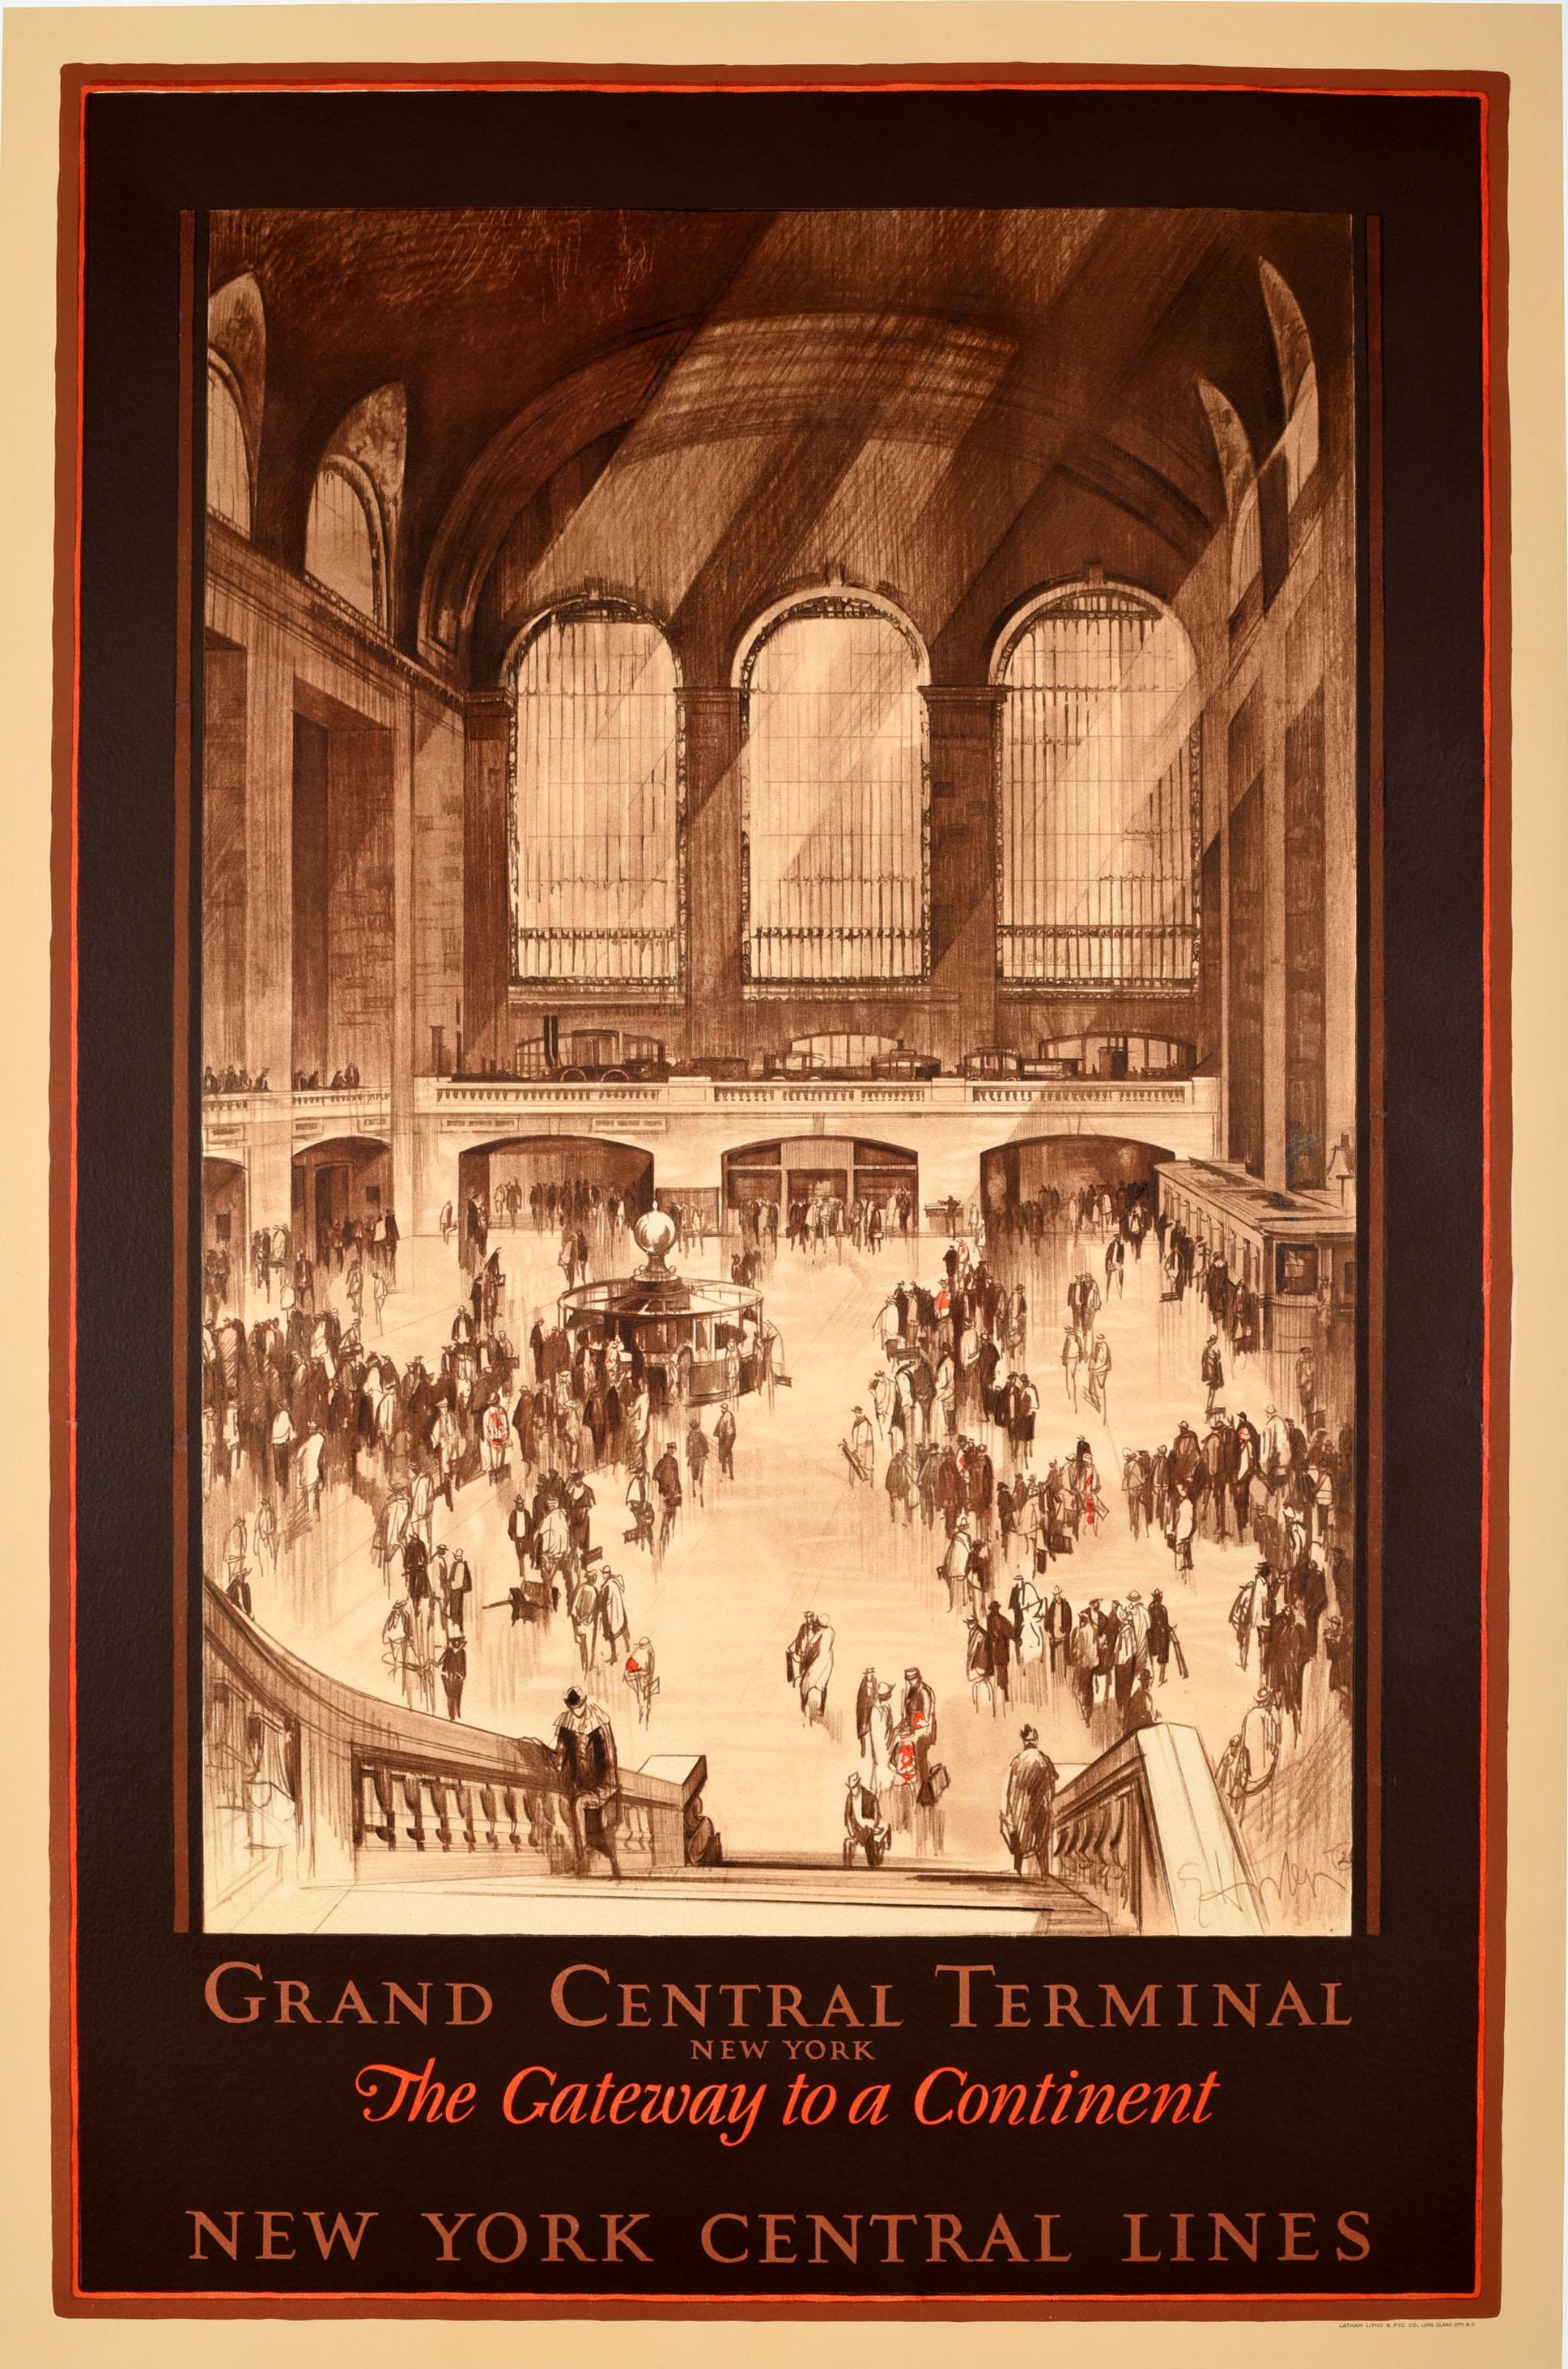 Earl Horter Print - Original Vintage US Railway Poster Grand Central Terminal New York Central Lines